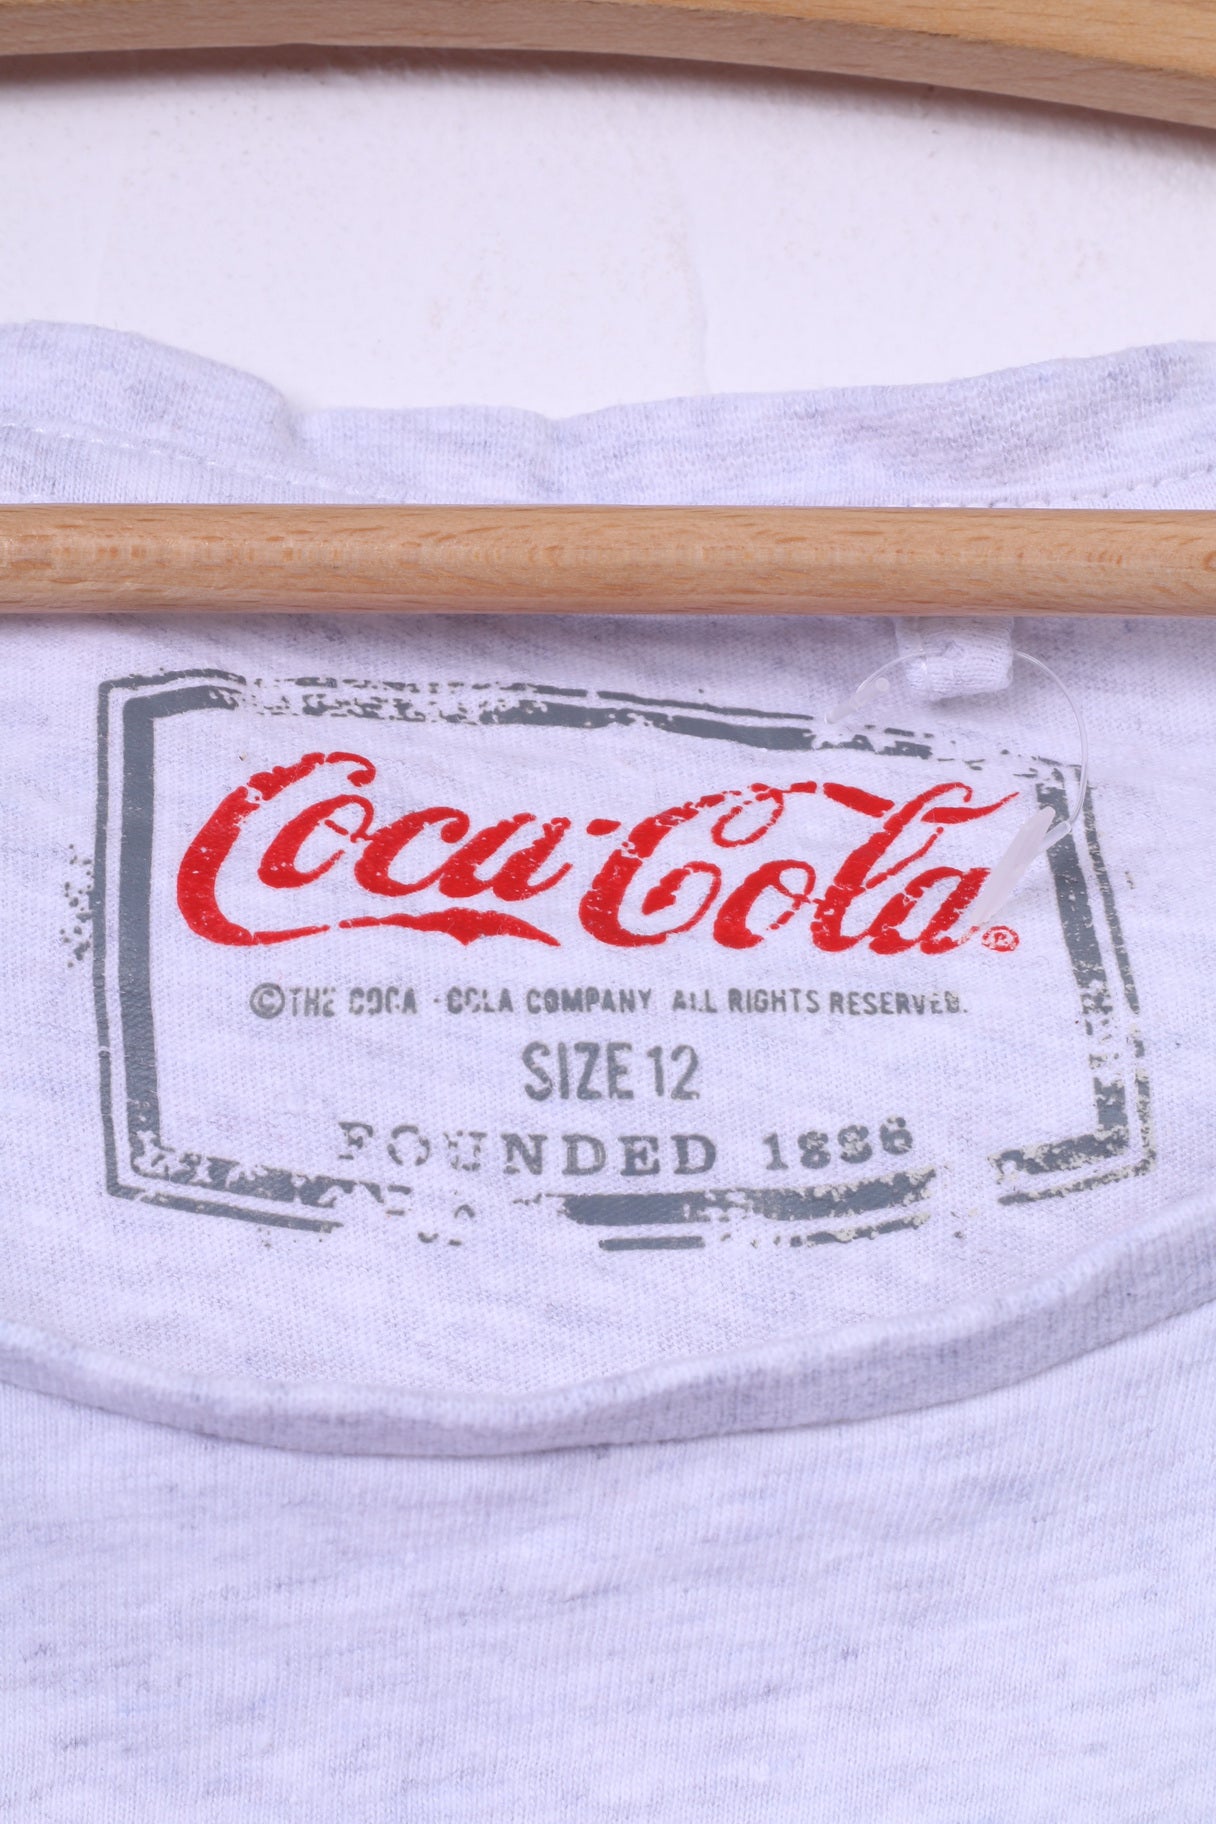 George Womens 40 12 M T-Shirt Graphic Coca-Cola Cotton Crew Neck Top